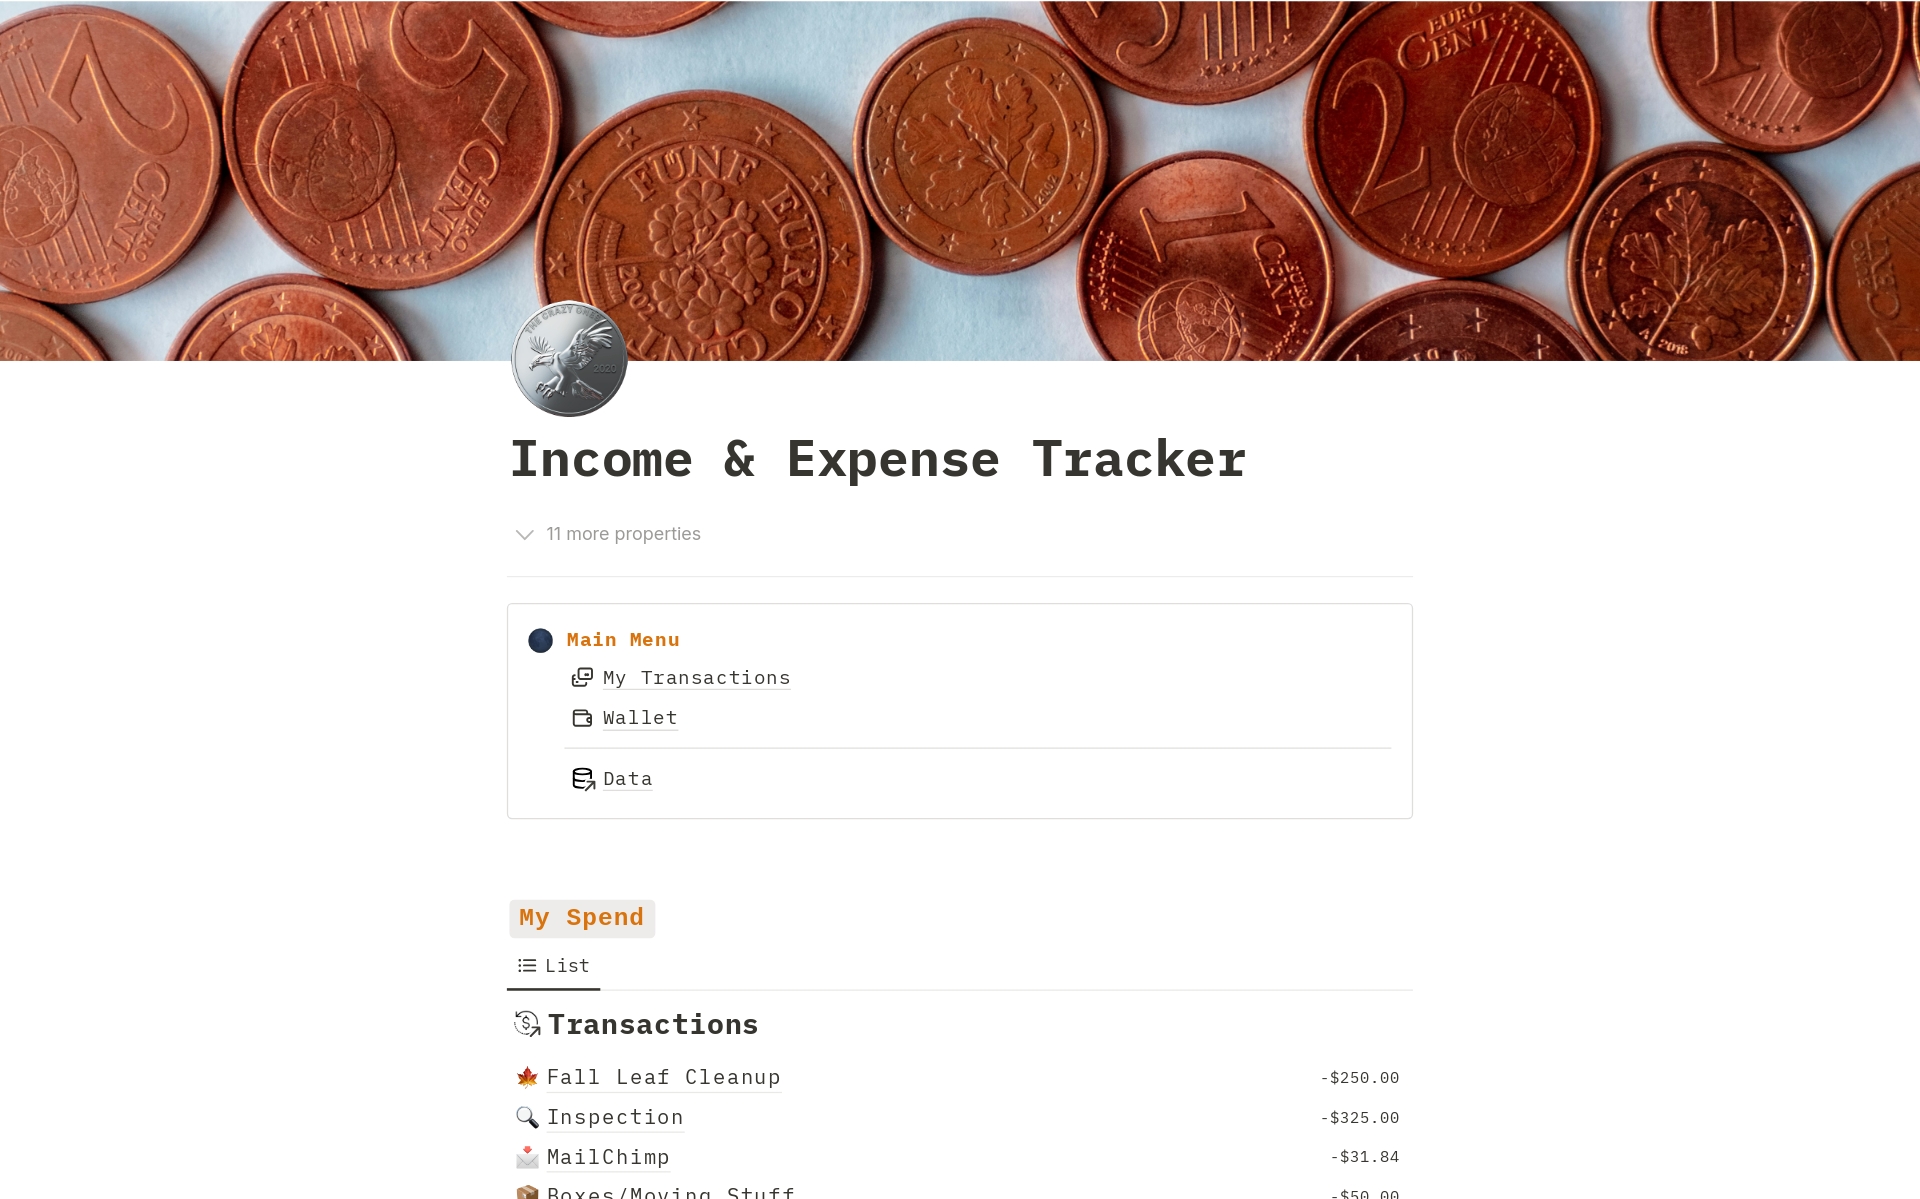 Vista previa de una plantilla para Income & Expense Tracker